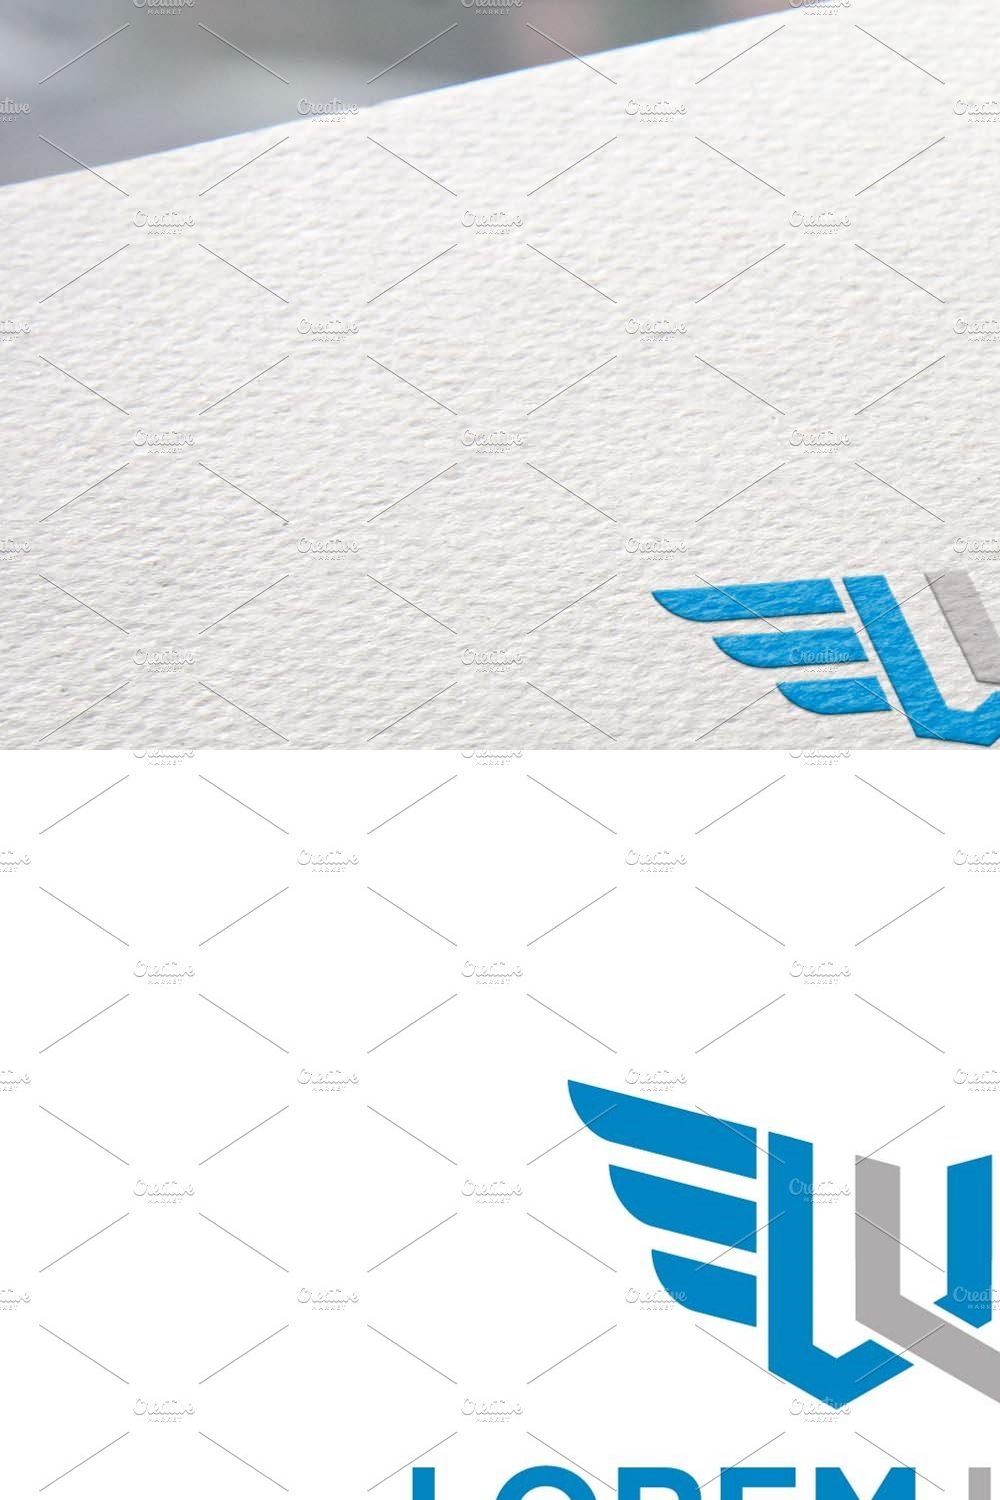 Letter W, worldwide wings logo pinterest preview image.